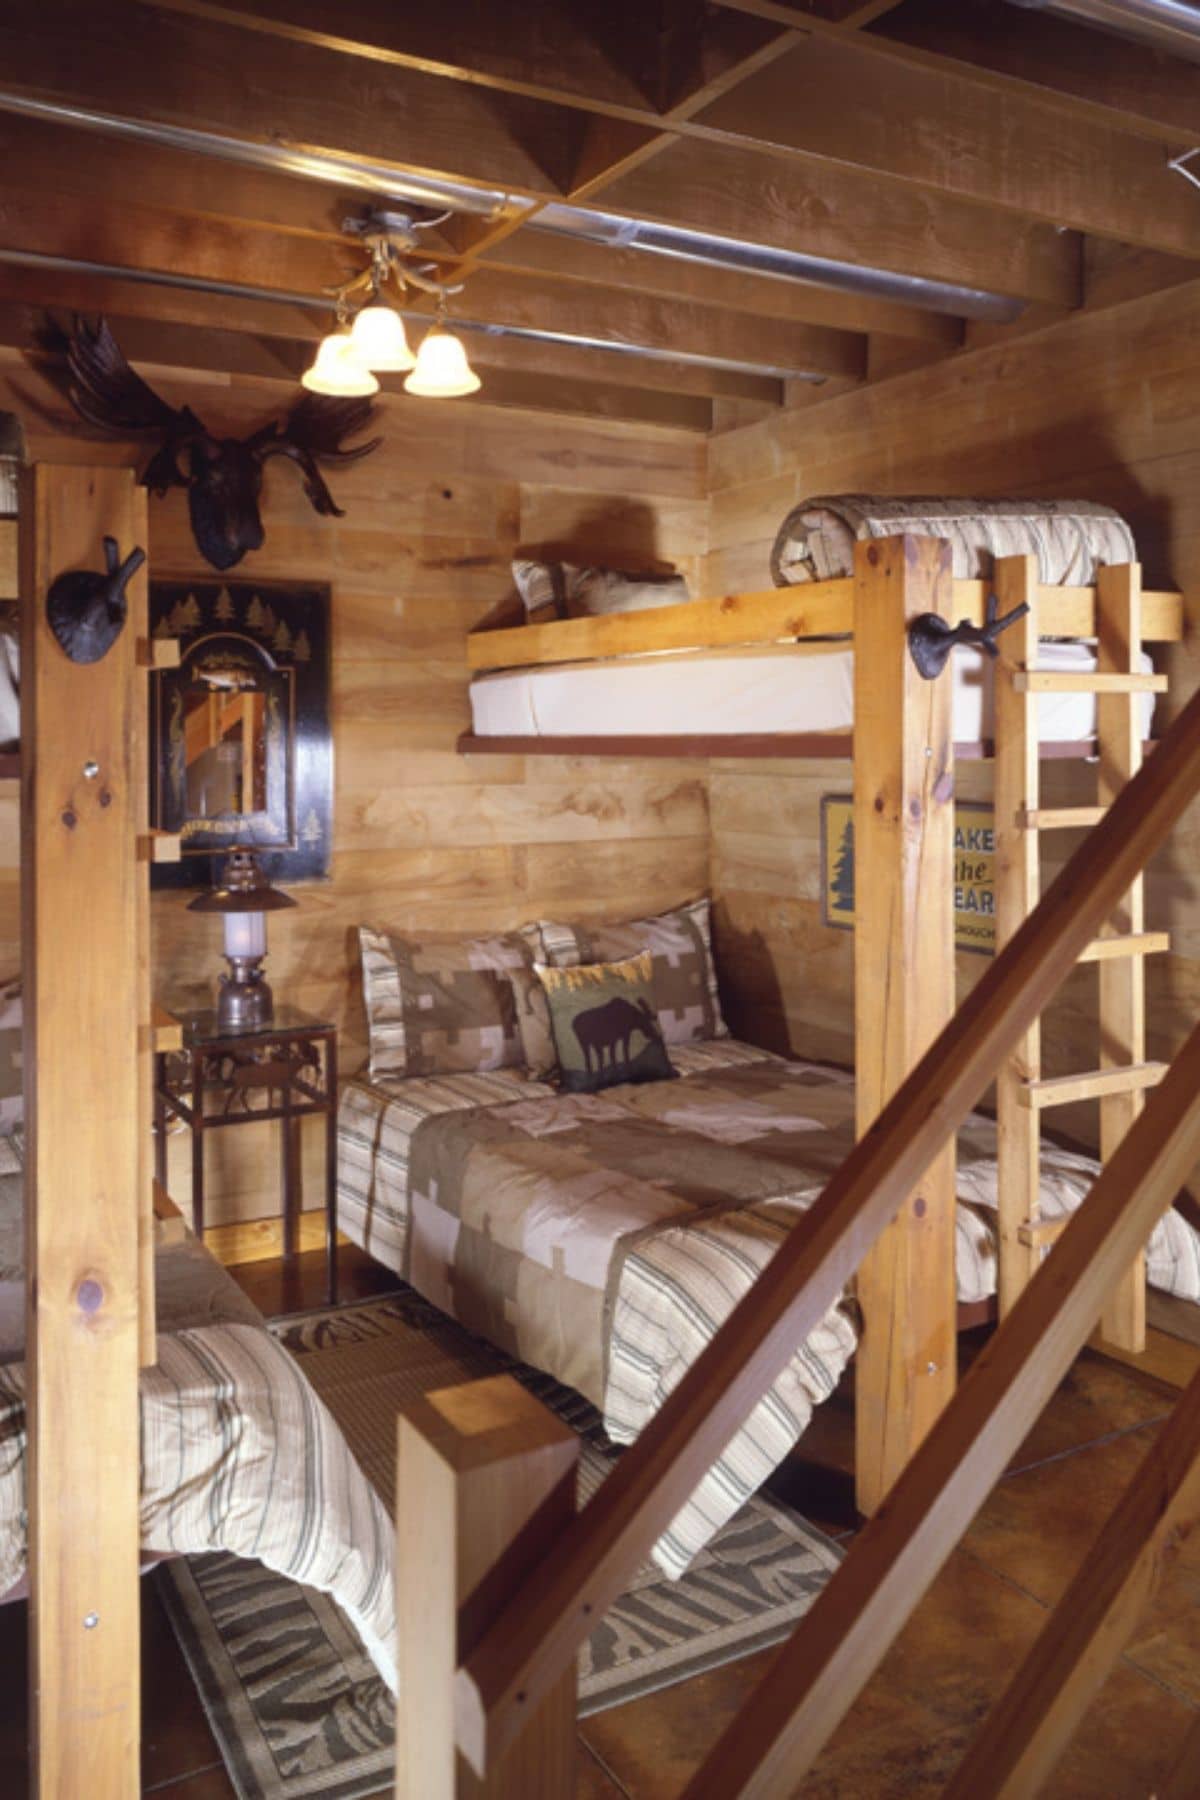 bunk beds near ladder in log room